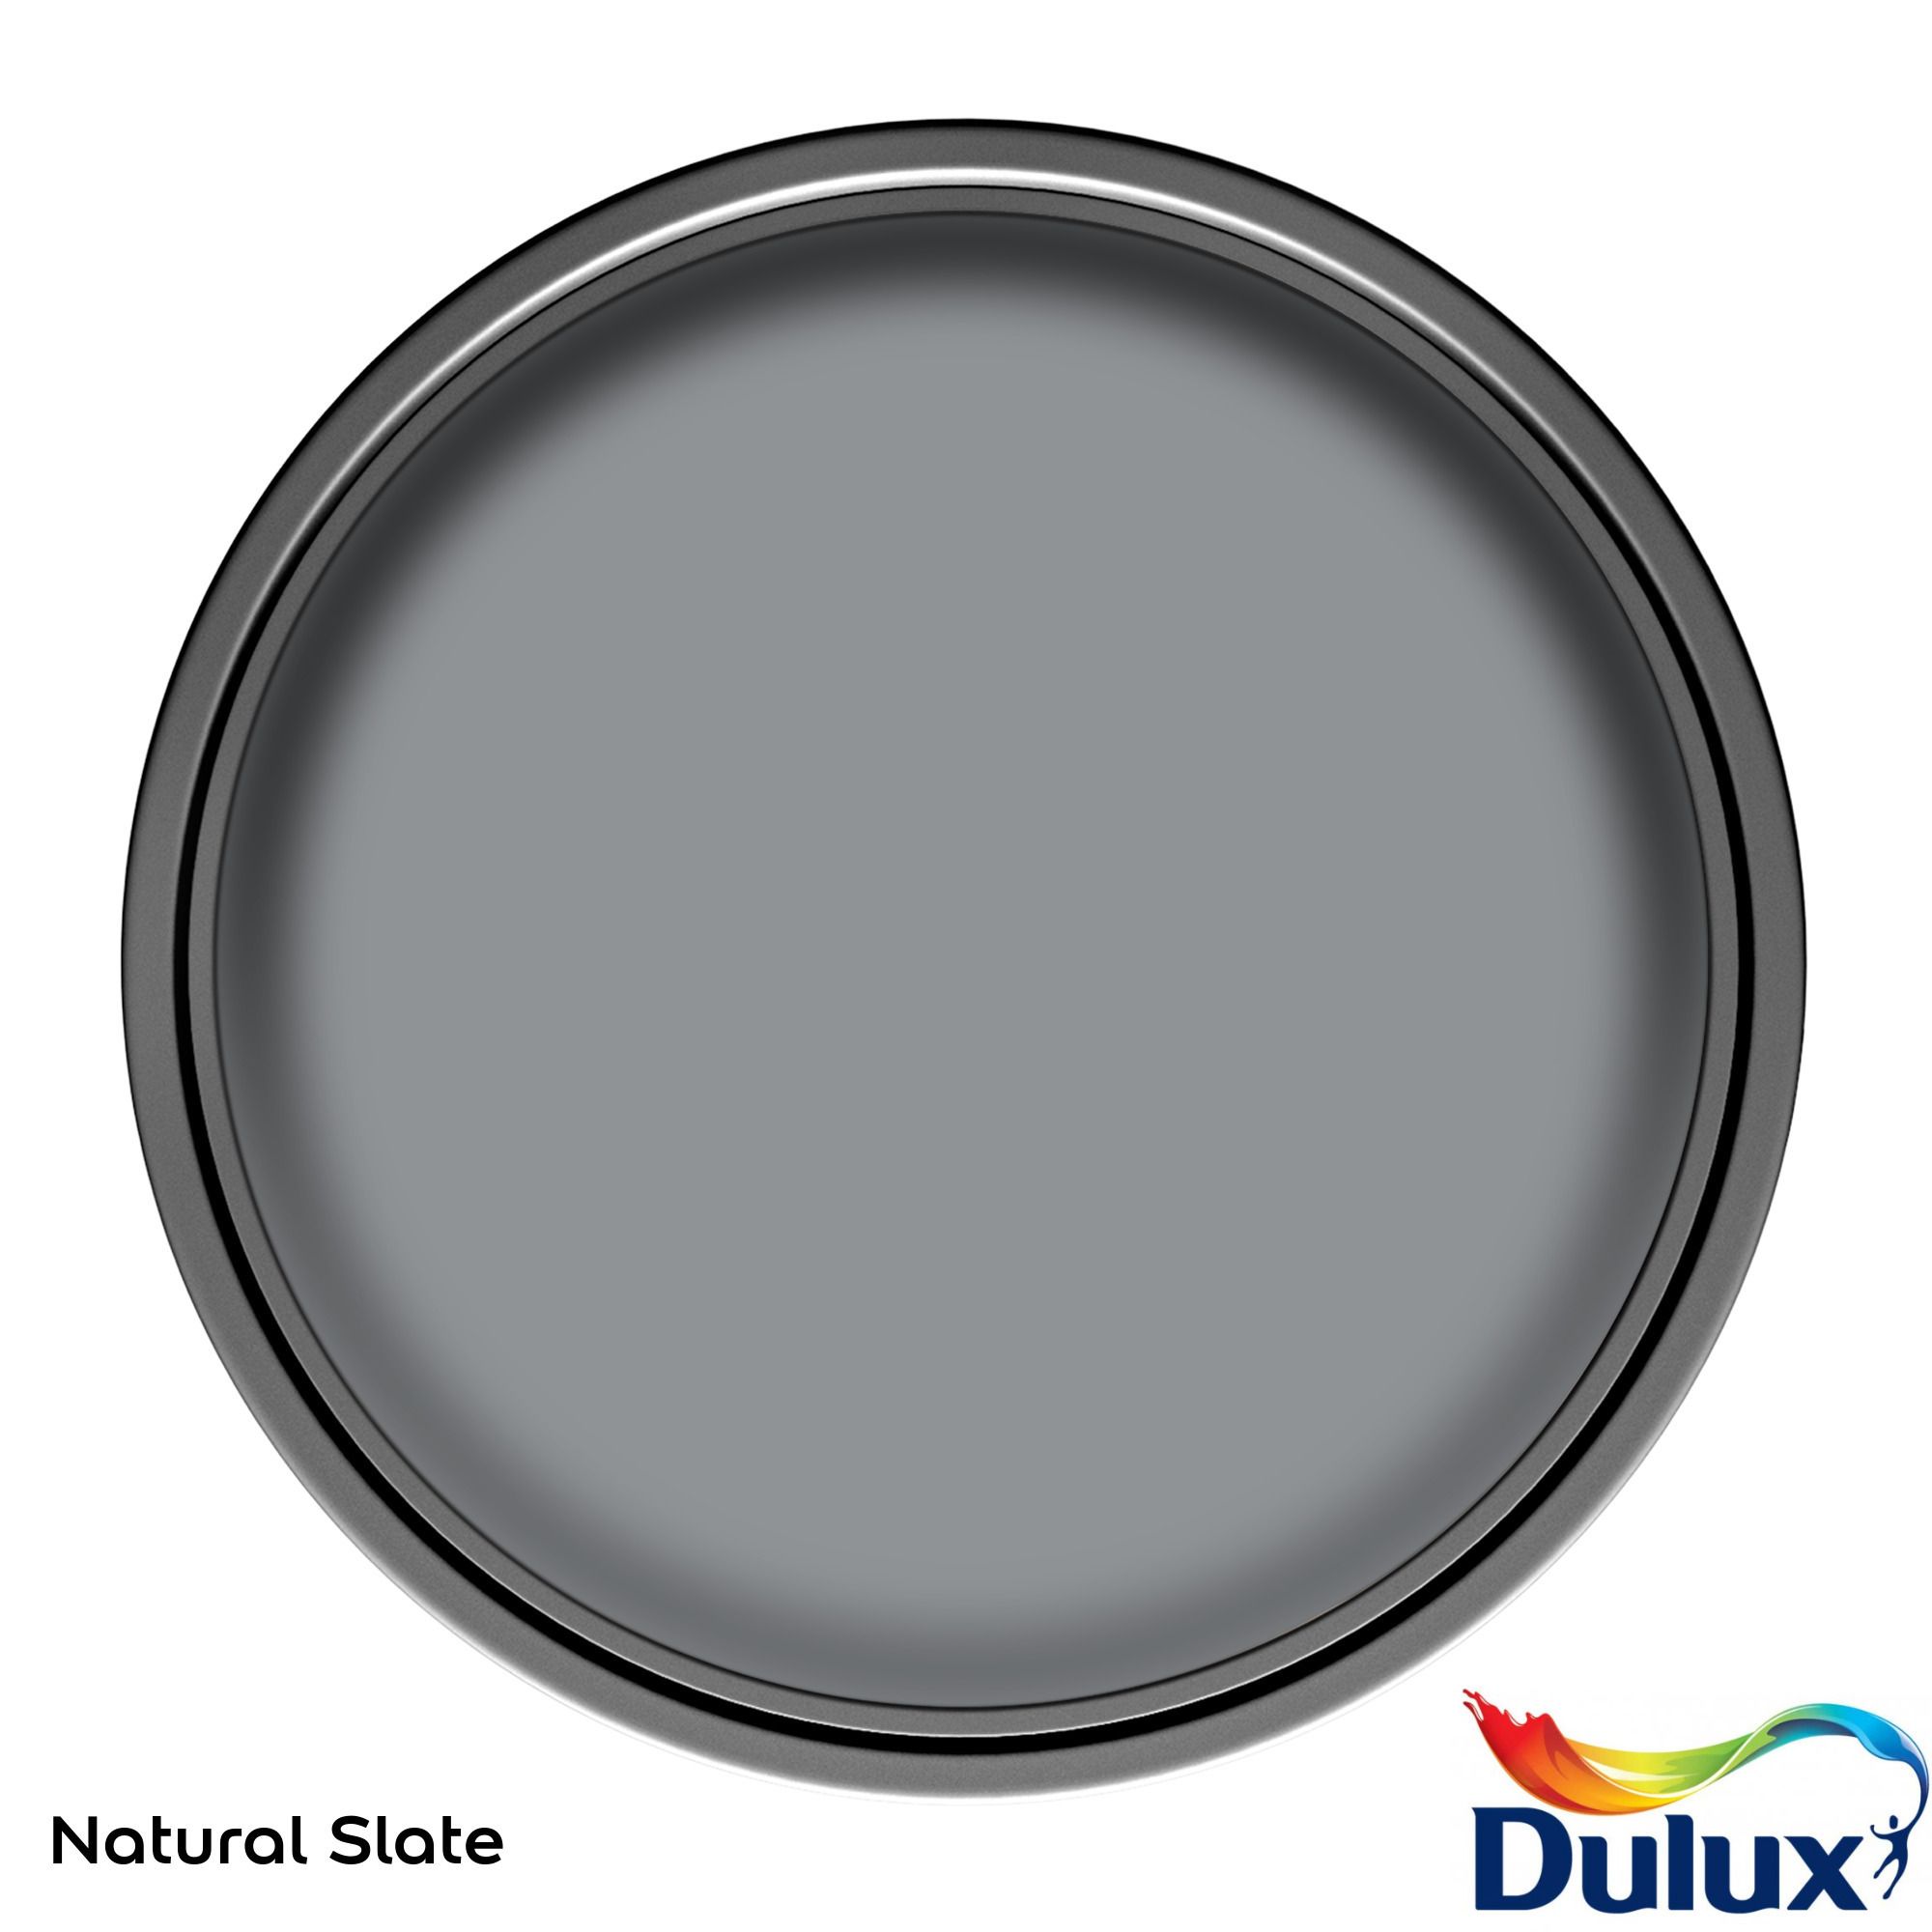 Dulux Easycare Bathroom Natural Slate Soft sheen Wall paint, 2.5L